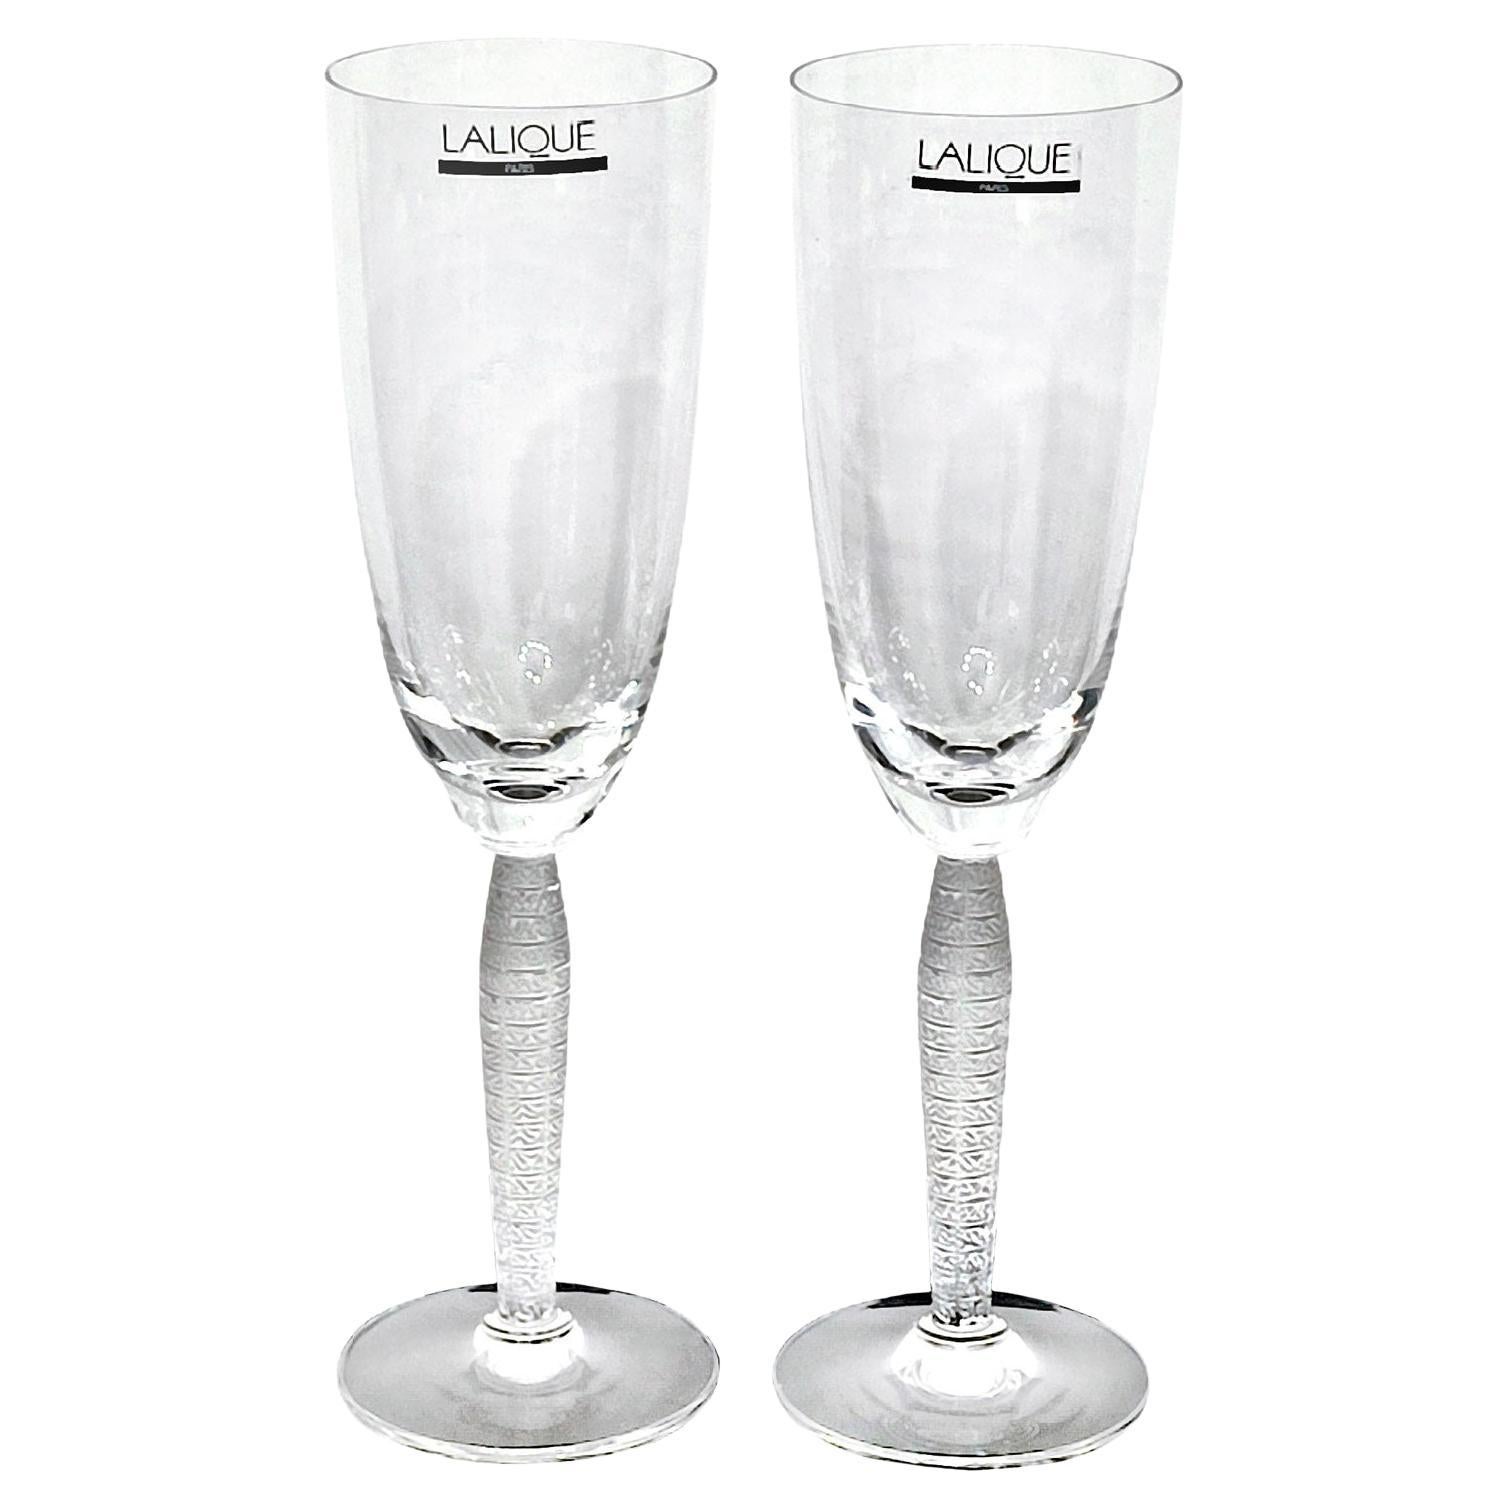 https://a.1stdibscdn.com/lalique-set-of-2-louvre-champagne-flutes-for-sale/f_9804/f_317232321670965644945/f_31723232_1670965645371_bg_processed.jpg